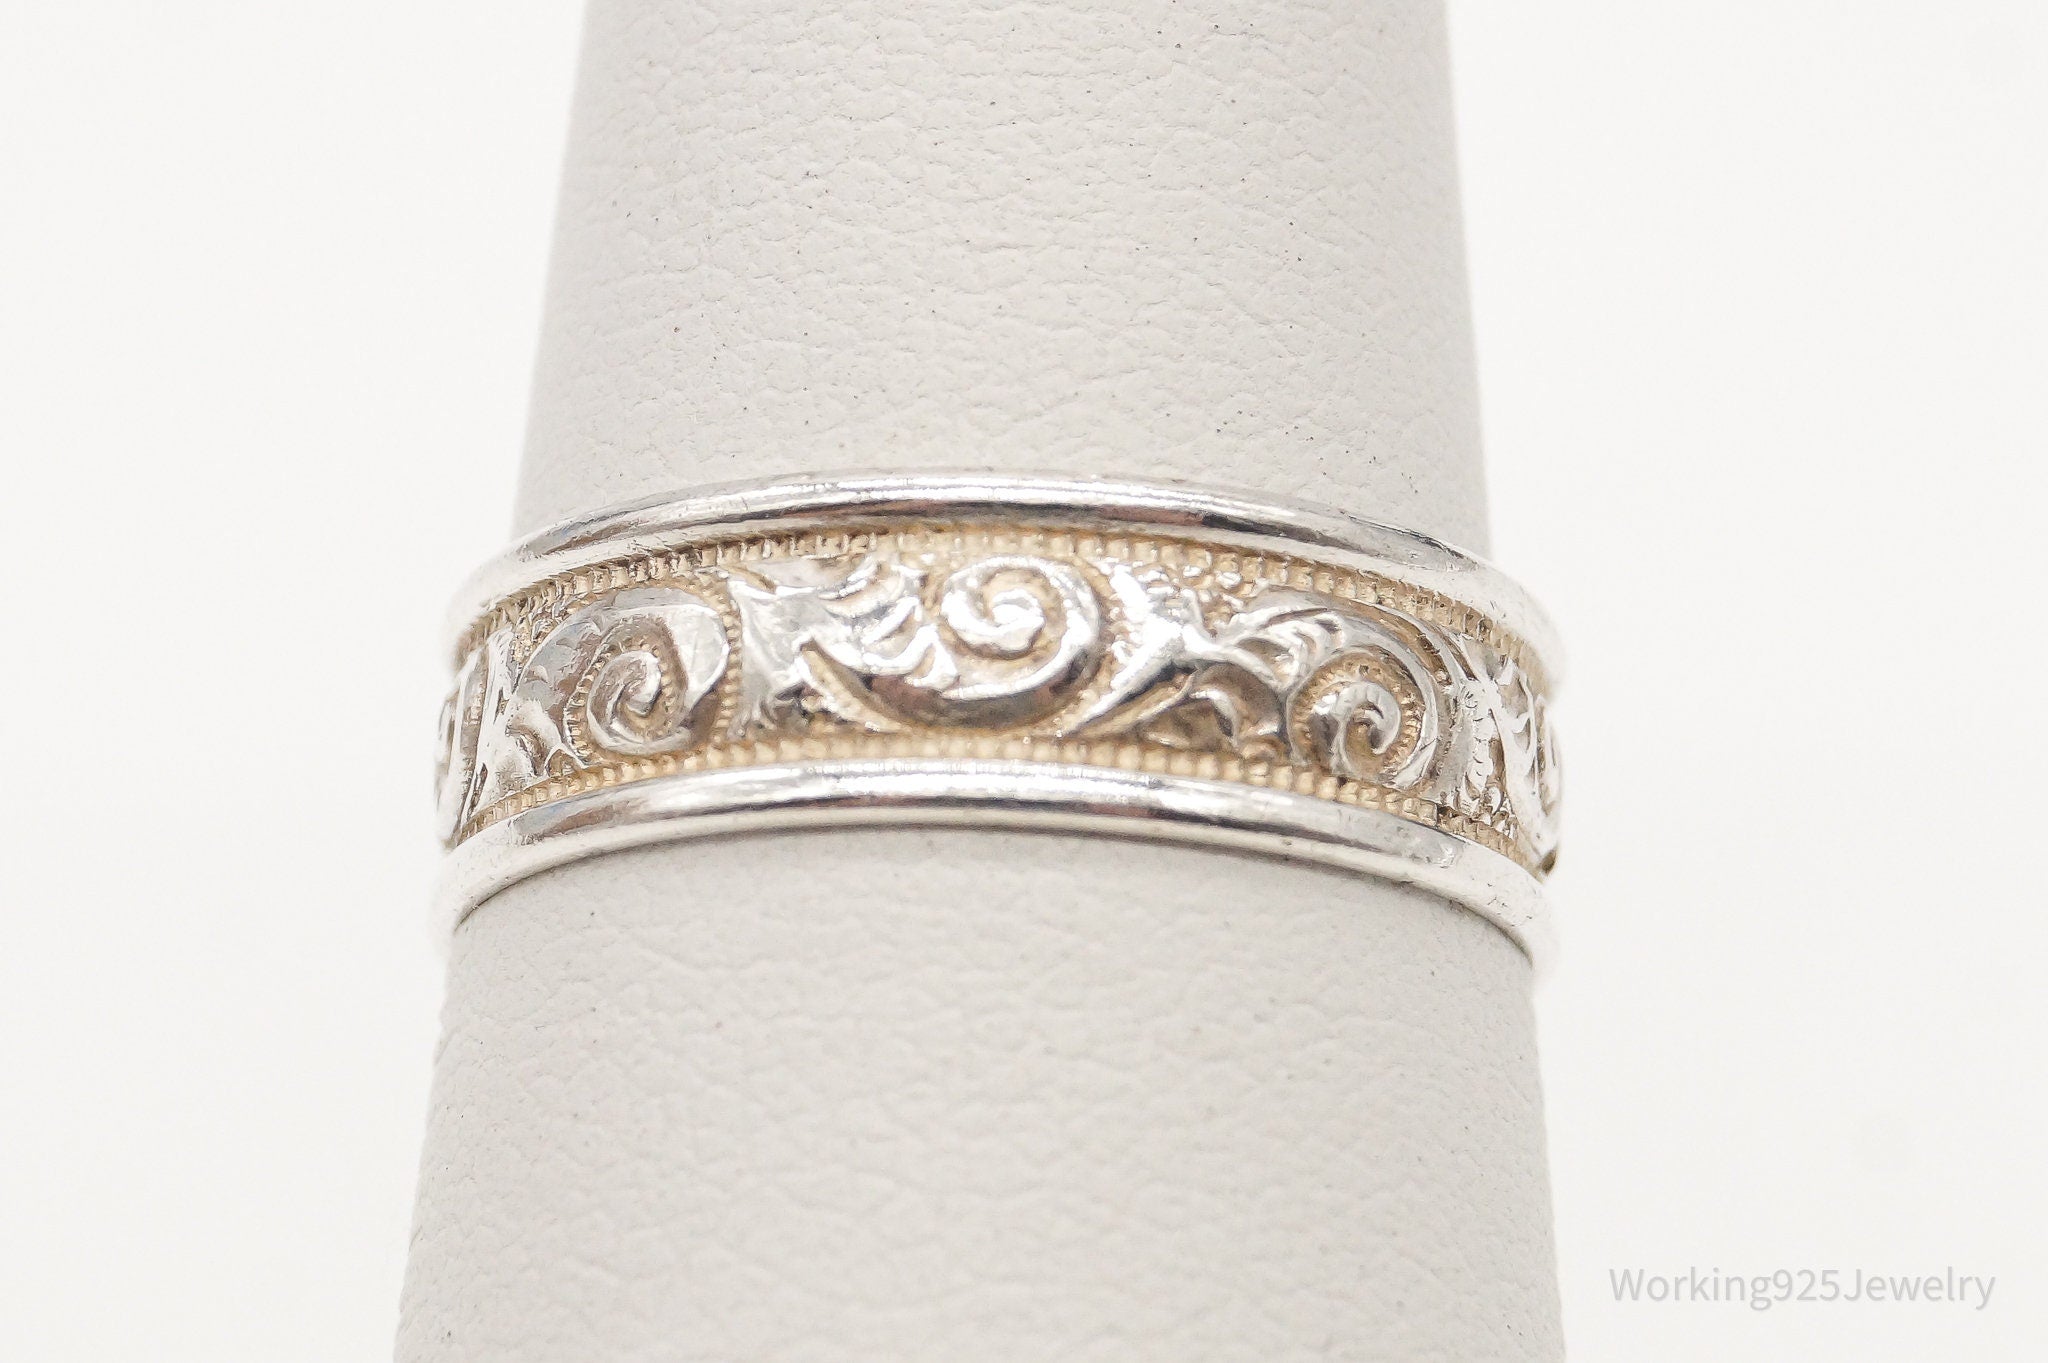 Antique Art Nouveau Sterling Silver Band Ring - Size 5.75